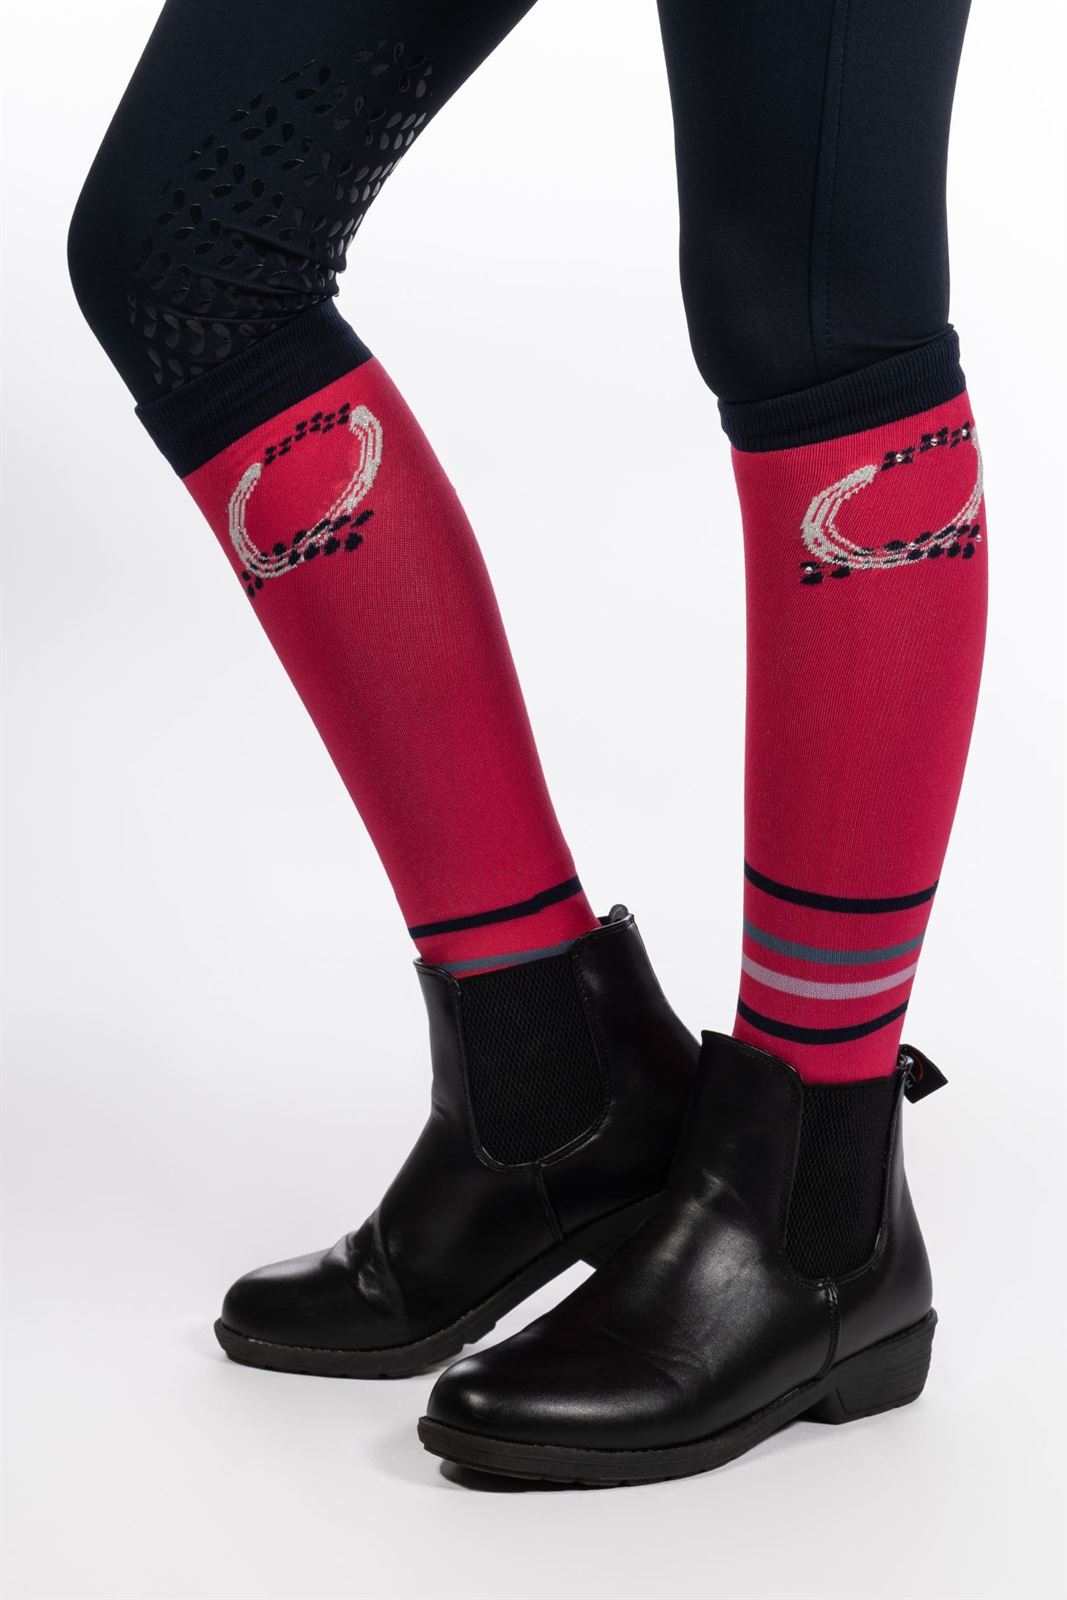 Calcetines HKM Sports Equipment Aymee color rosa talla 30/34 - Imagen 2